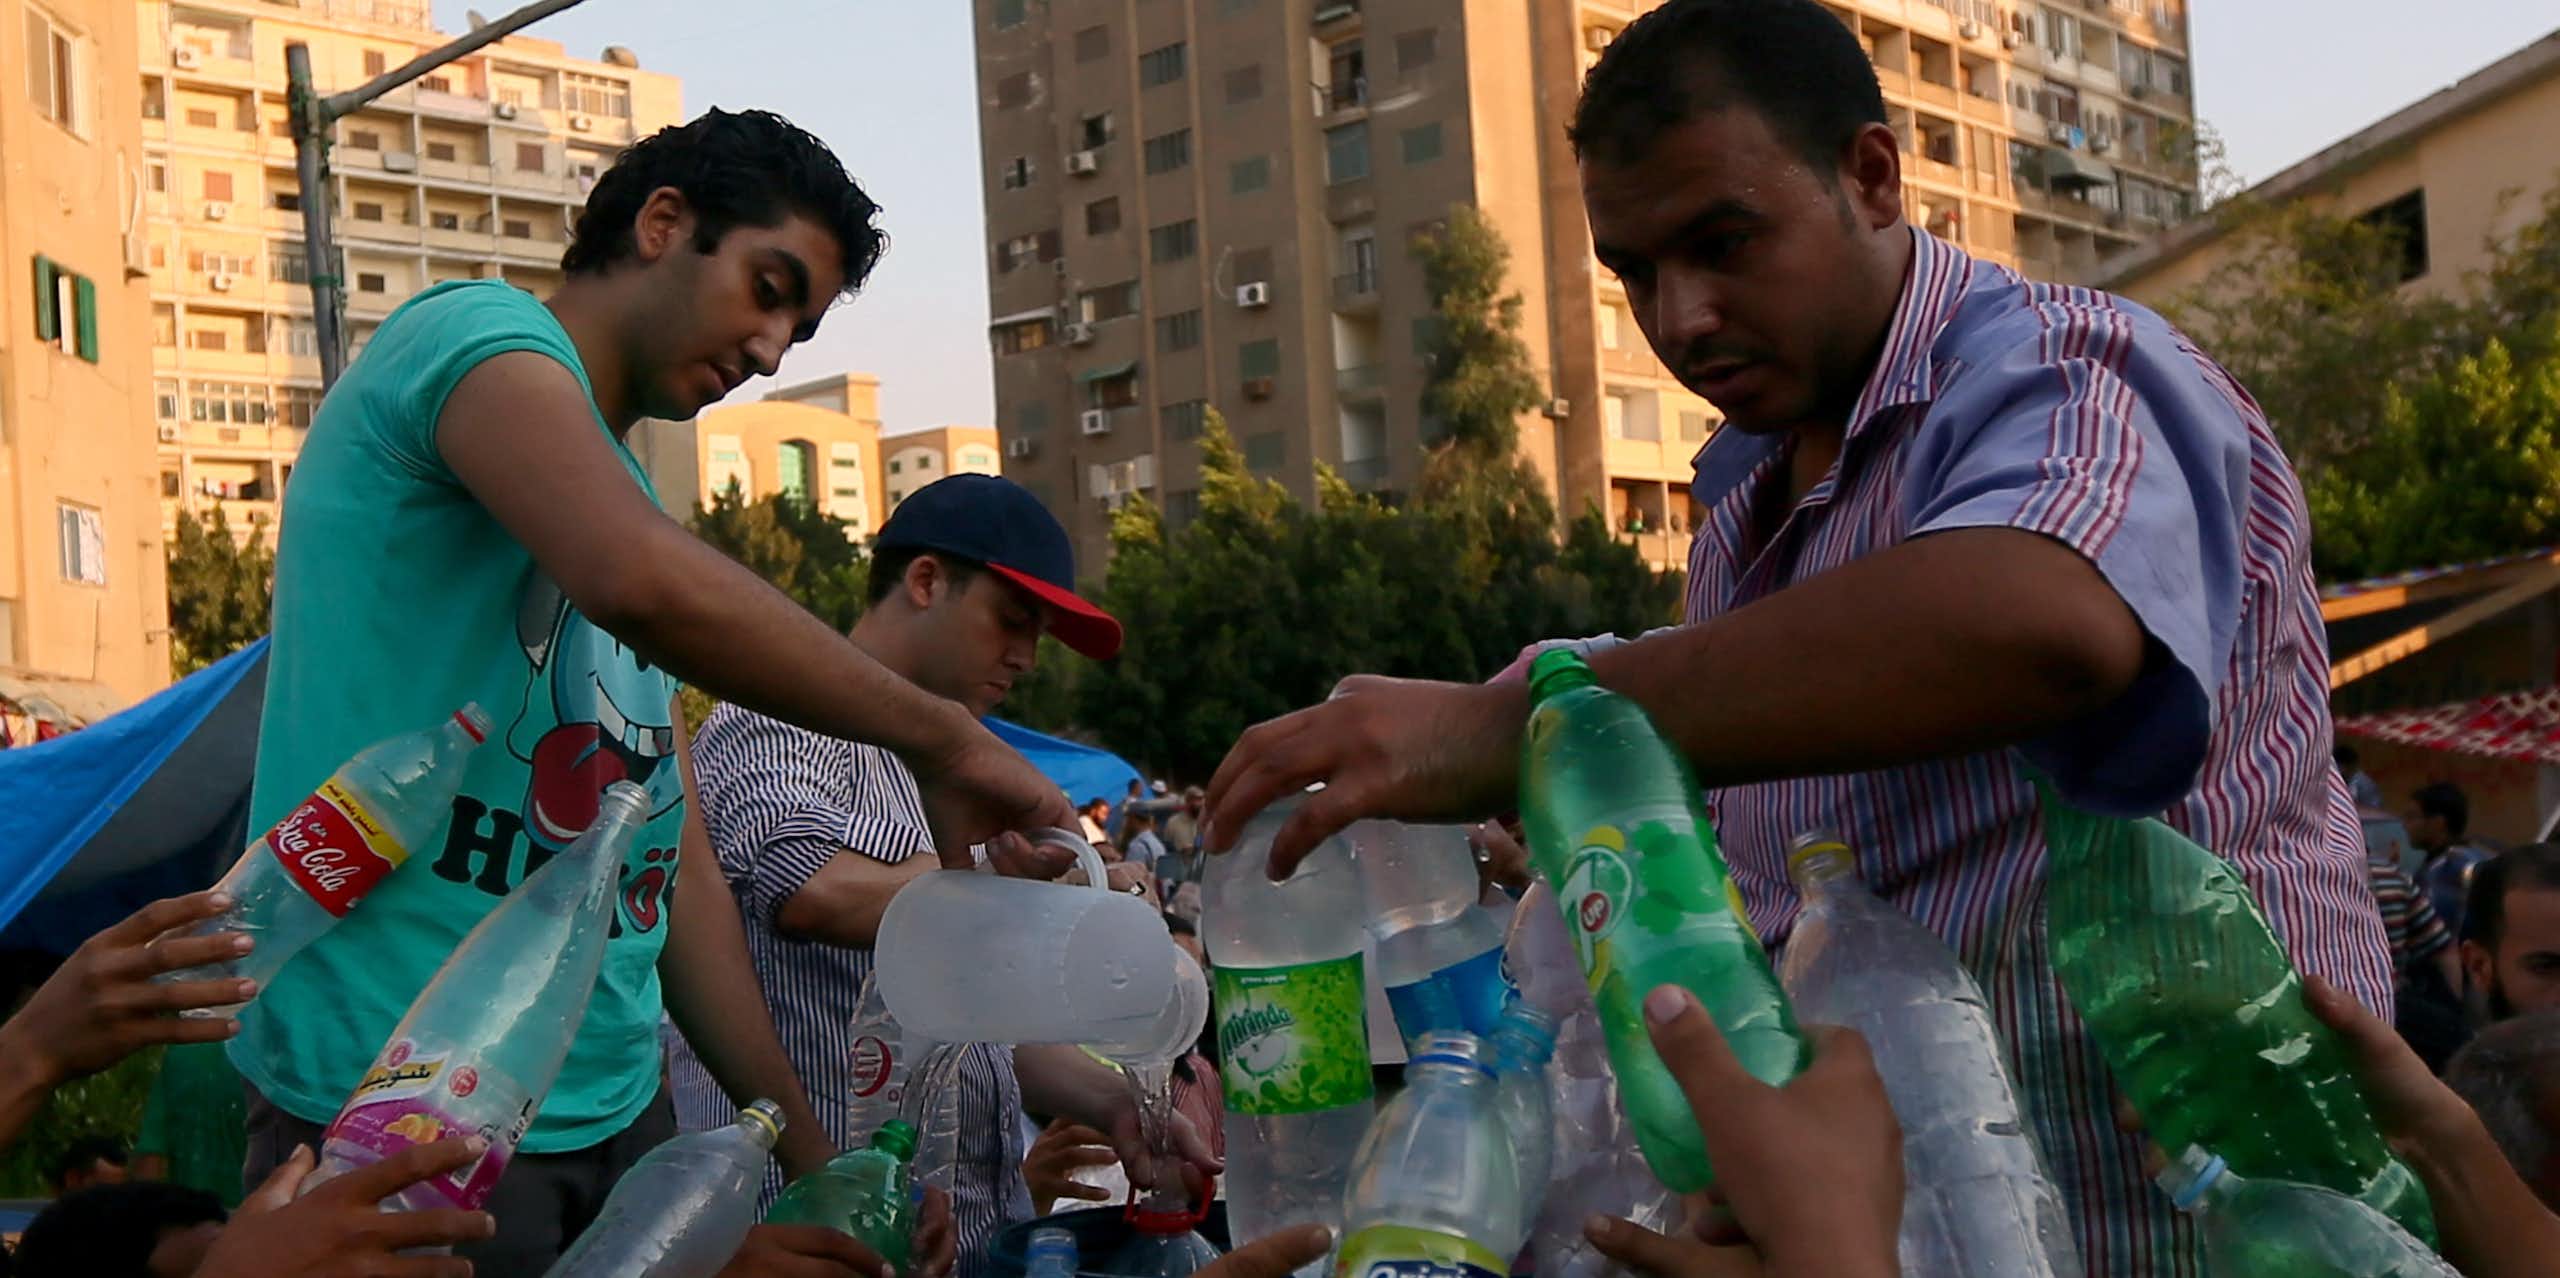 Men fill up water bottles from a jug.